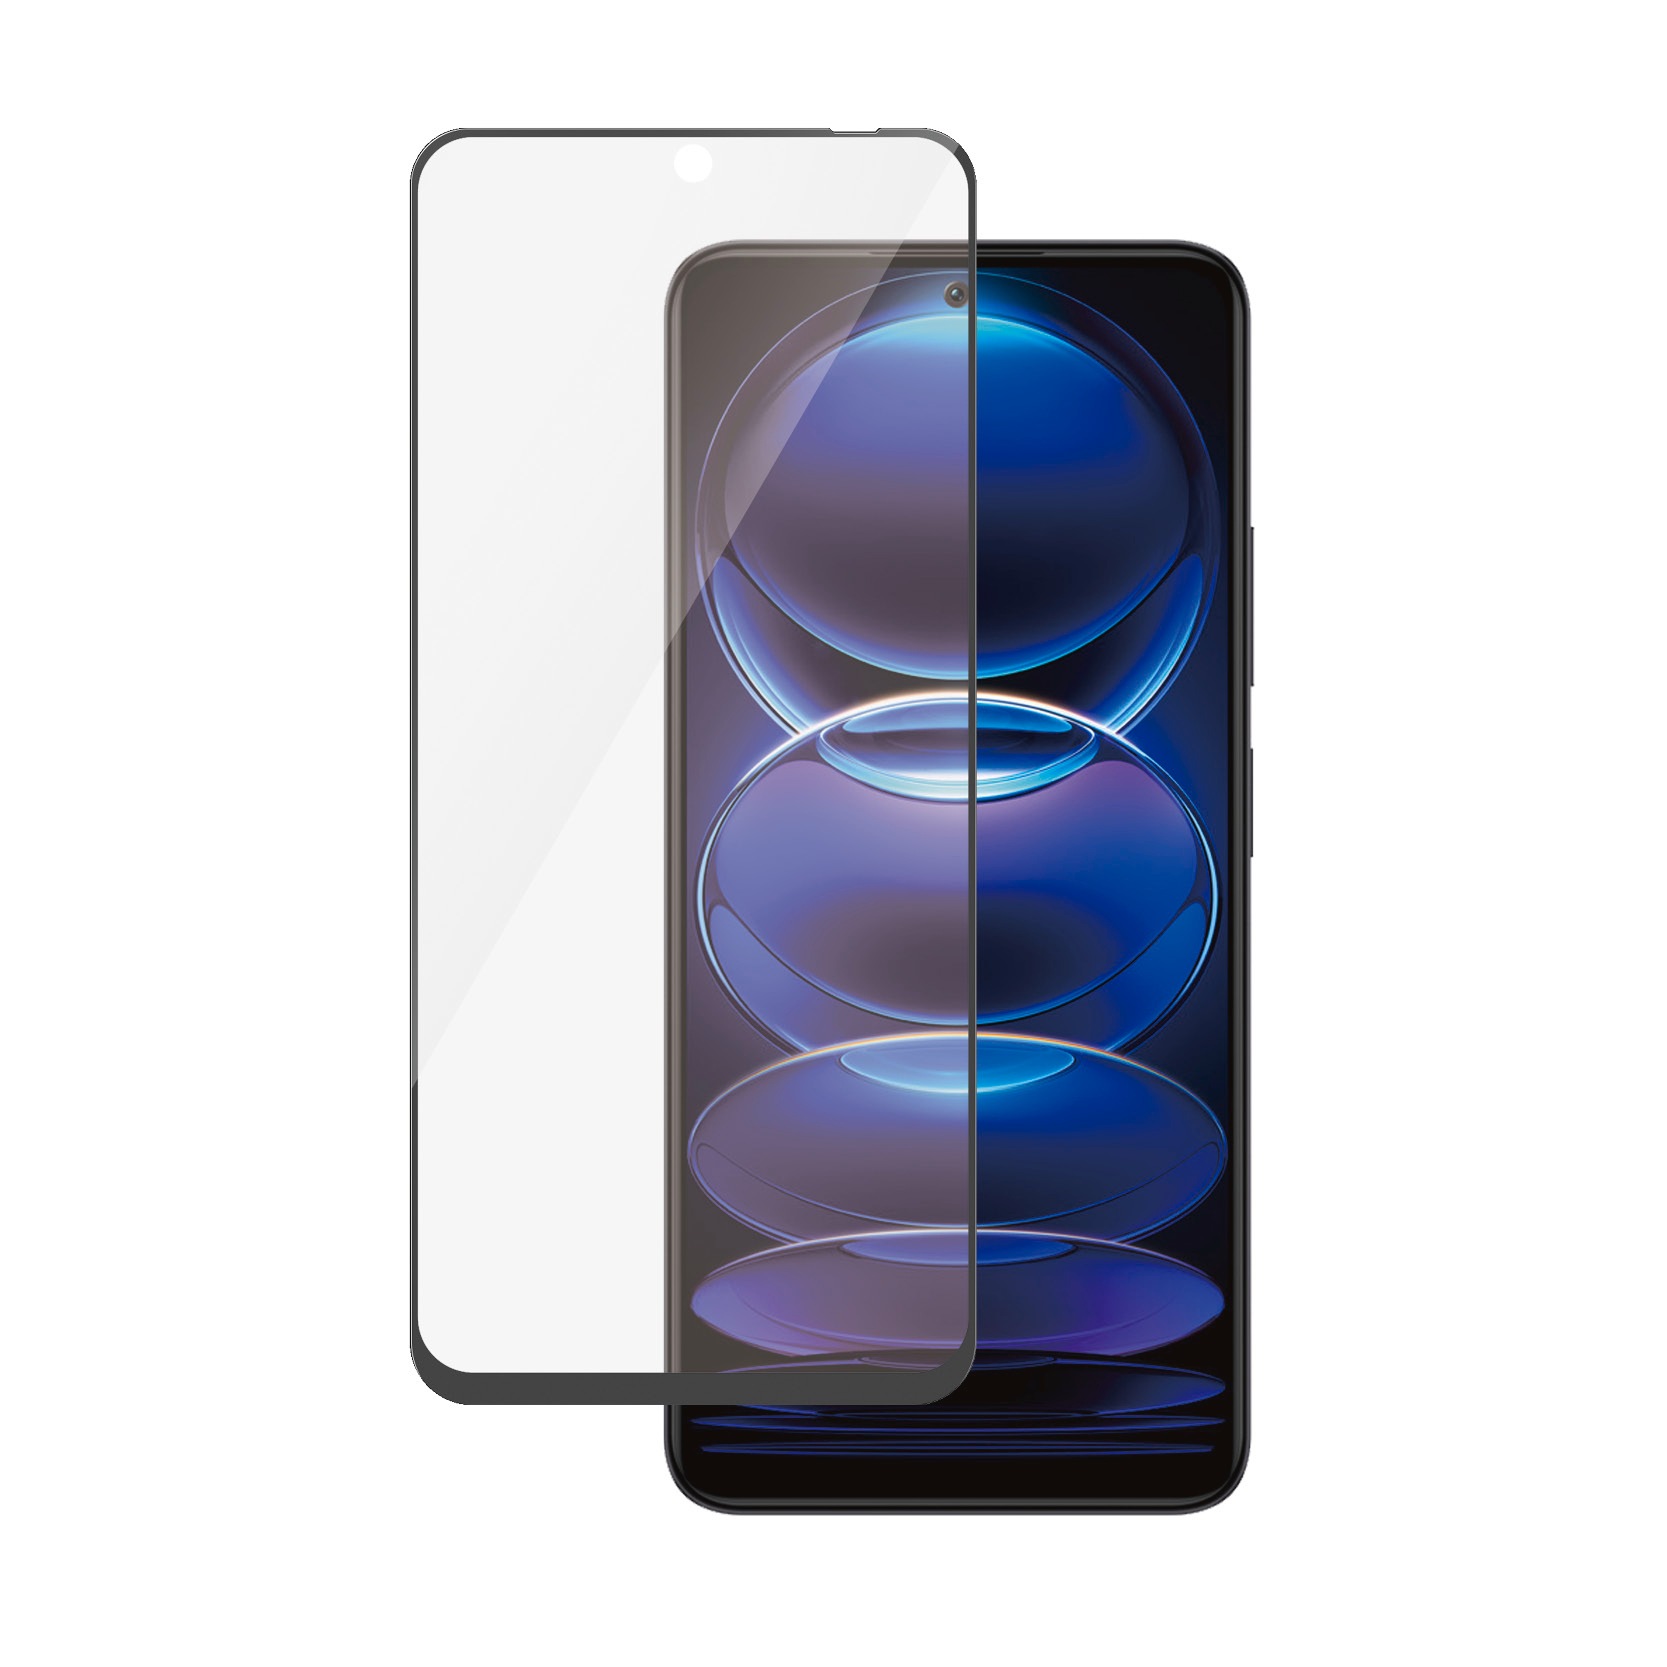 PanzerGlass Displayschutzglas »Screen Protector Ultra Wide Fit«, für Xiaomi Redmi Note 12 5G